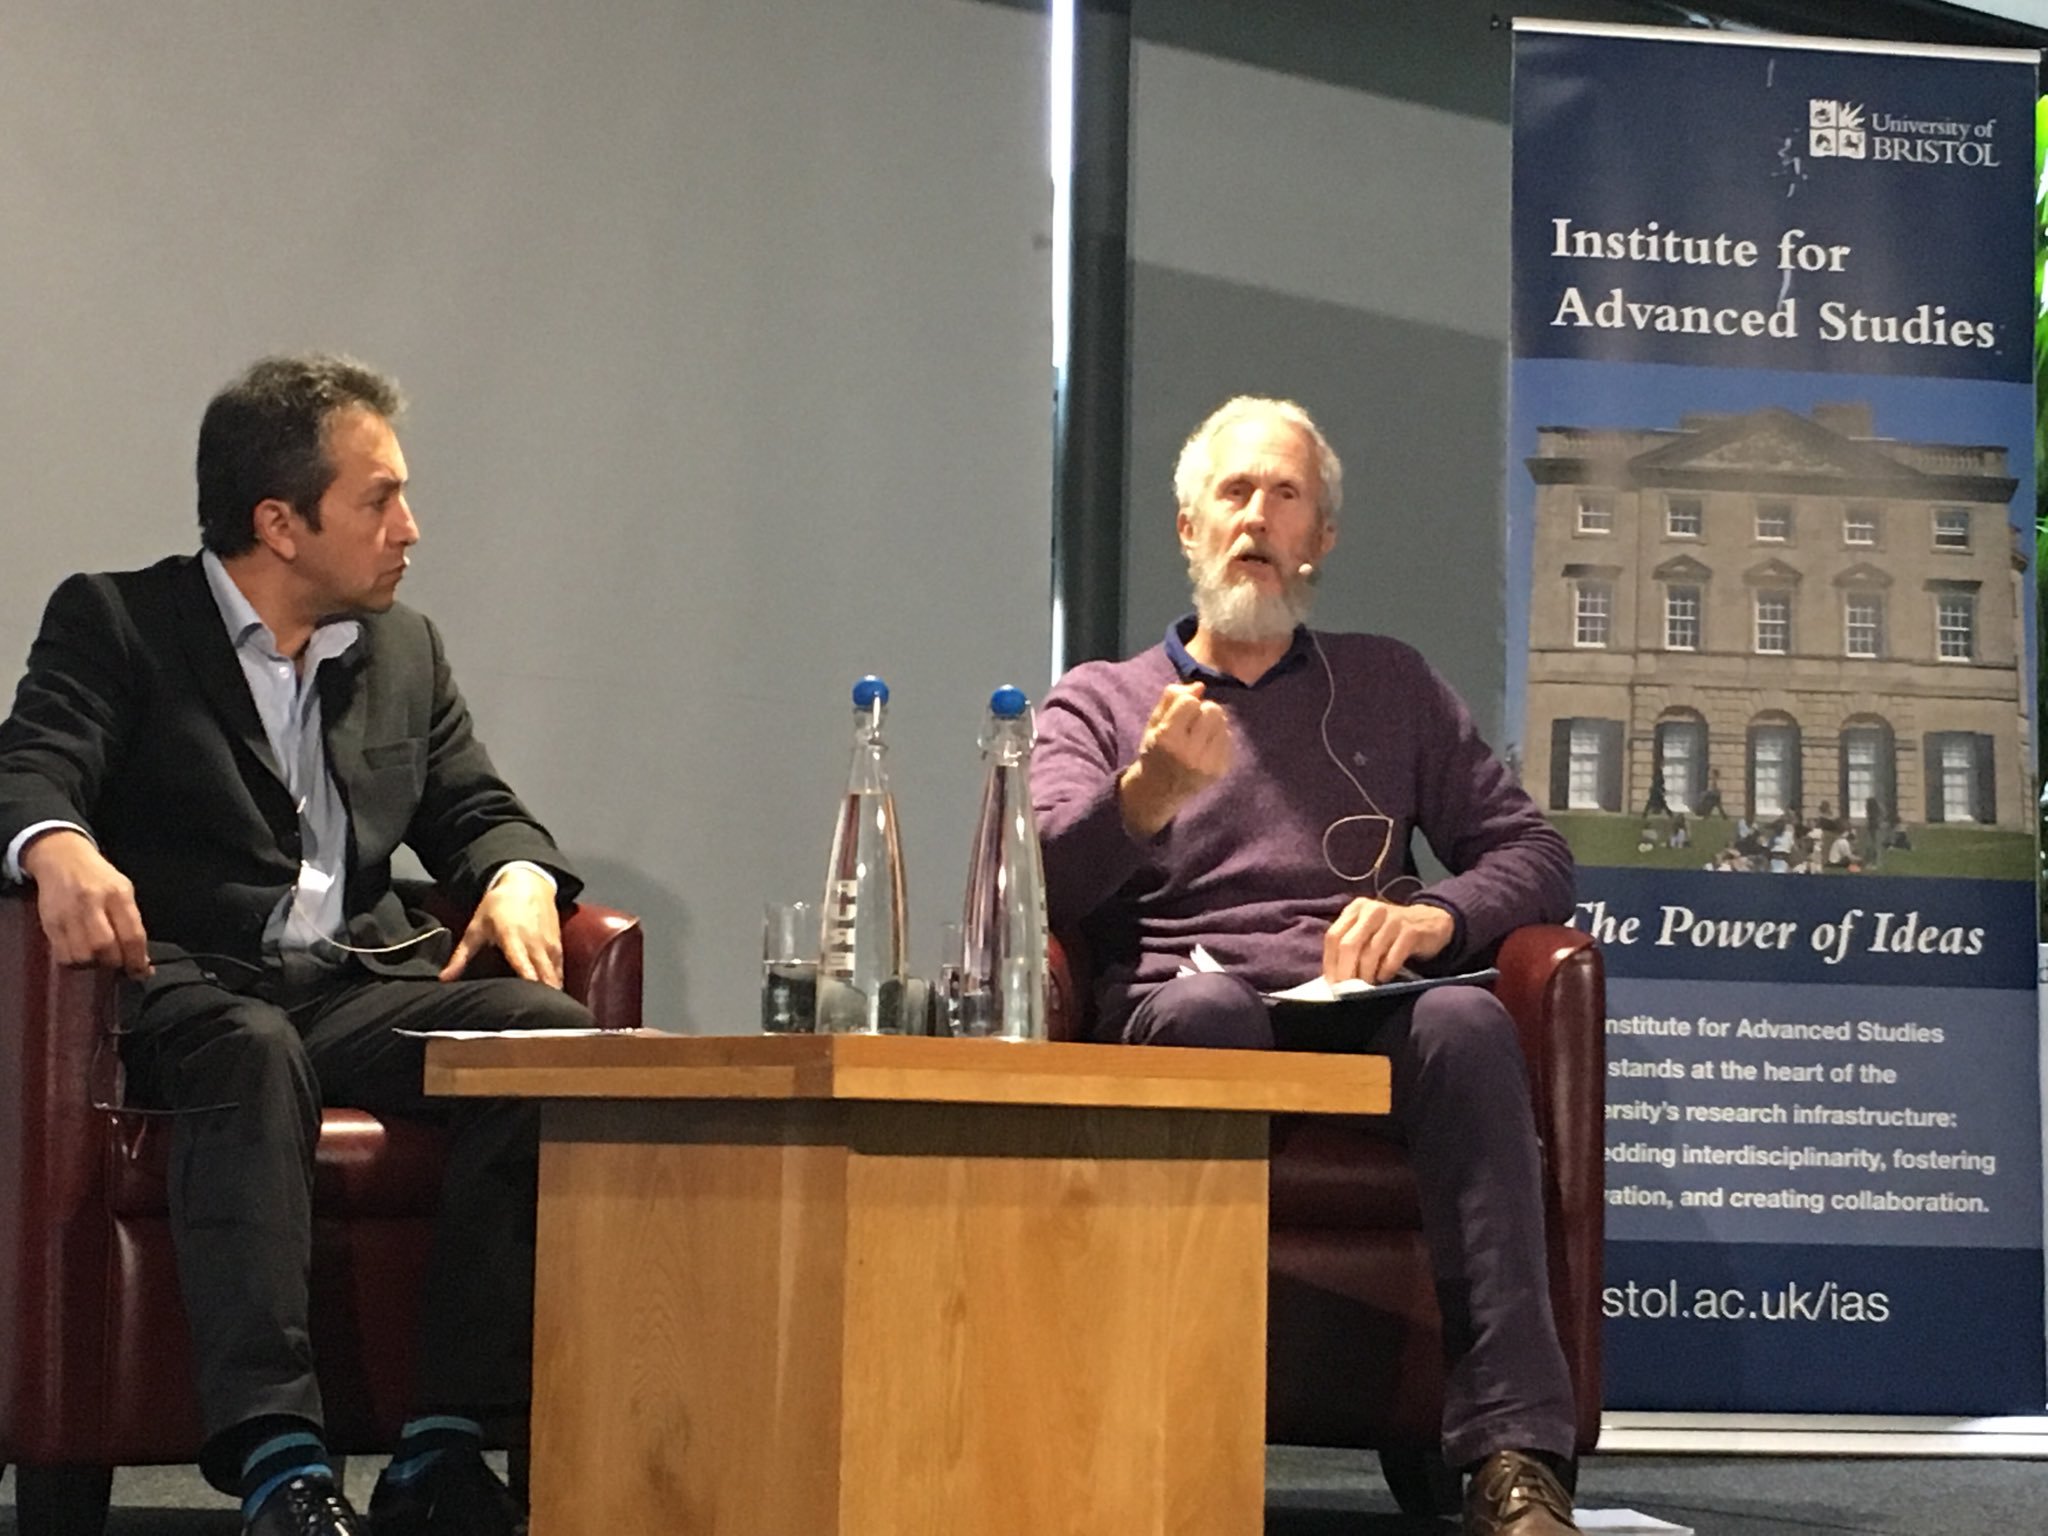 Doyne Farmer, Physicist, Oxford Martin School, “economics is hard - atoms don’t think!” #economicsfest @UoBris_IAS @FestivalofIdeas https://t.co/mKQZM2iQhb